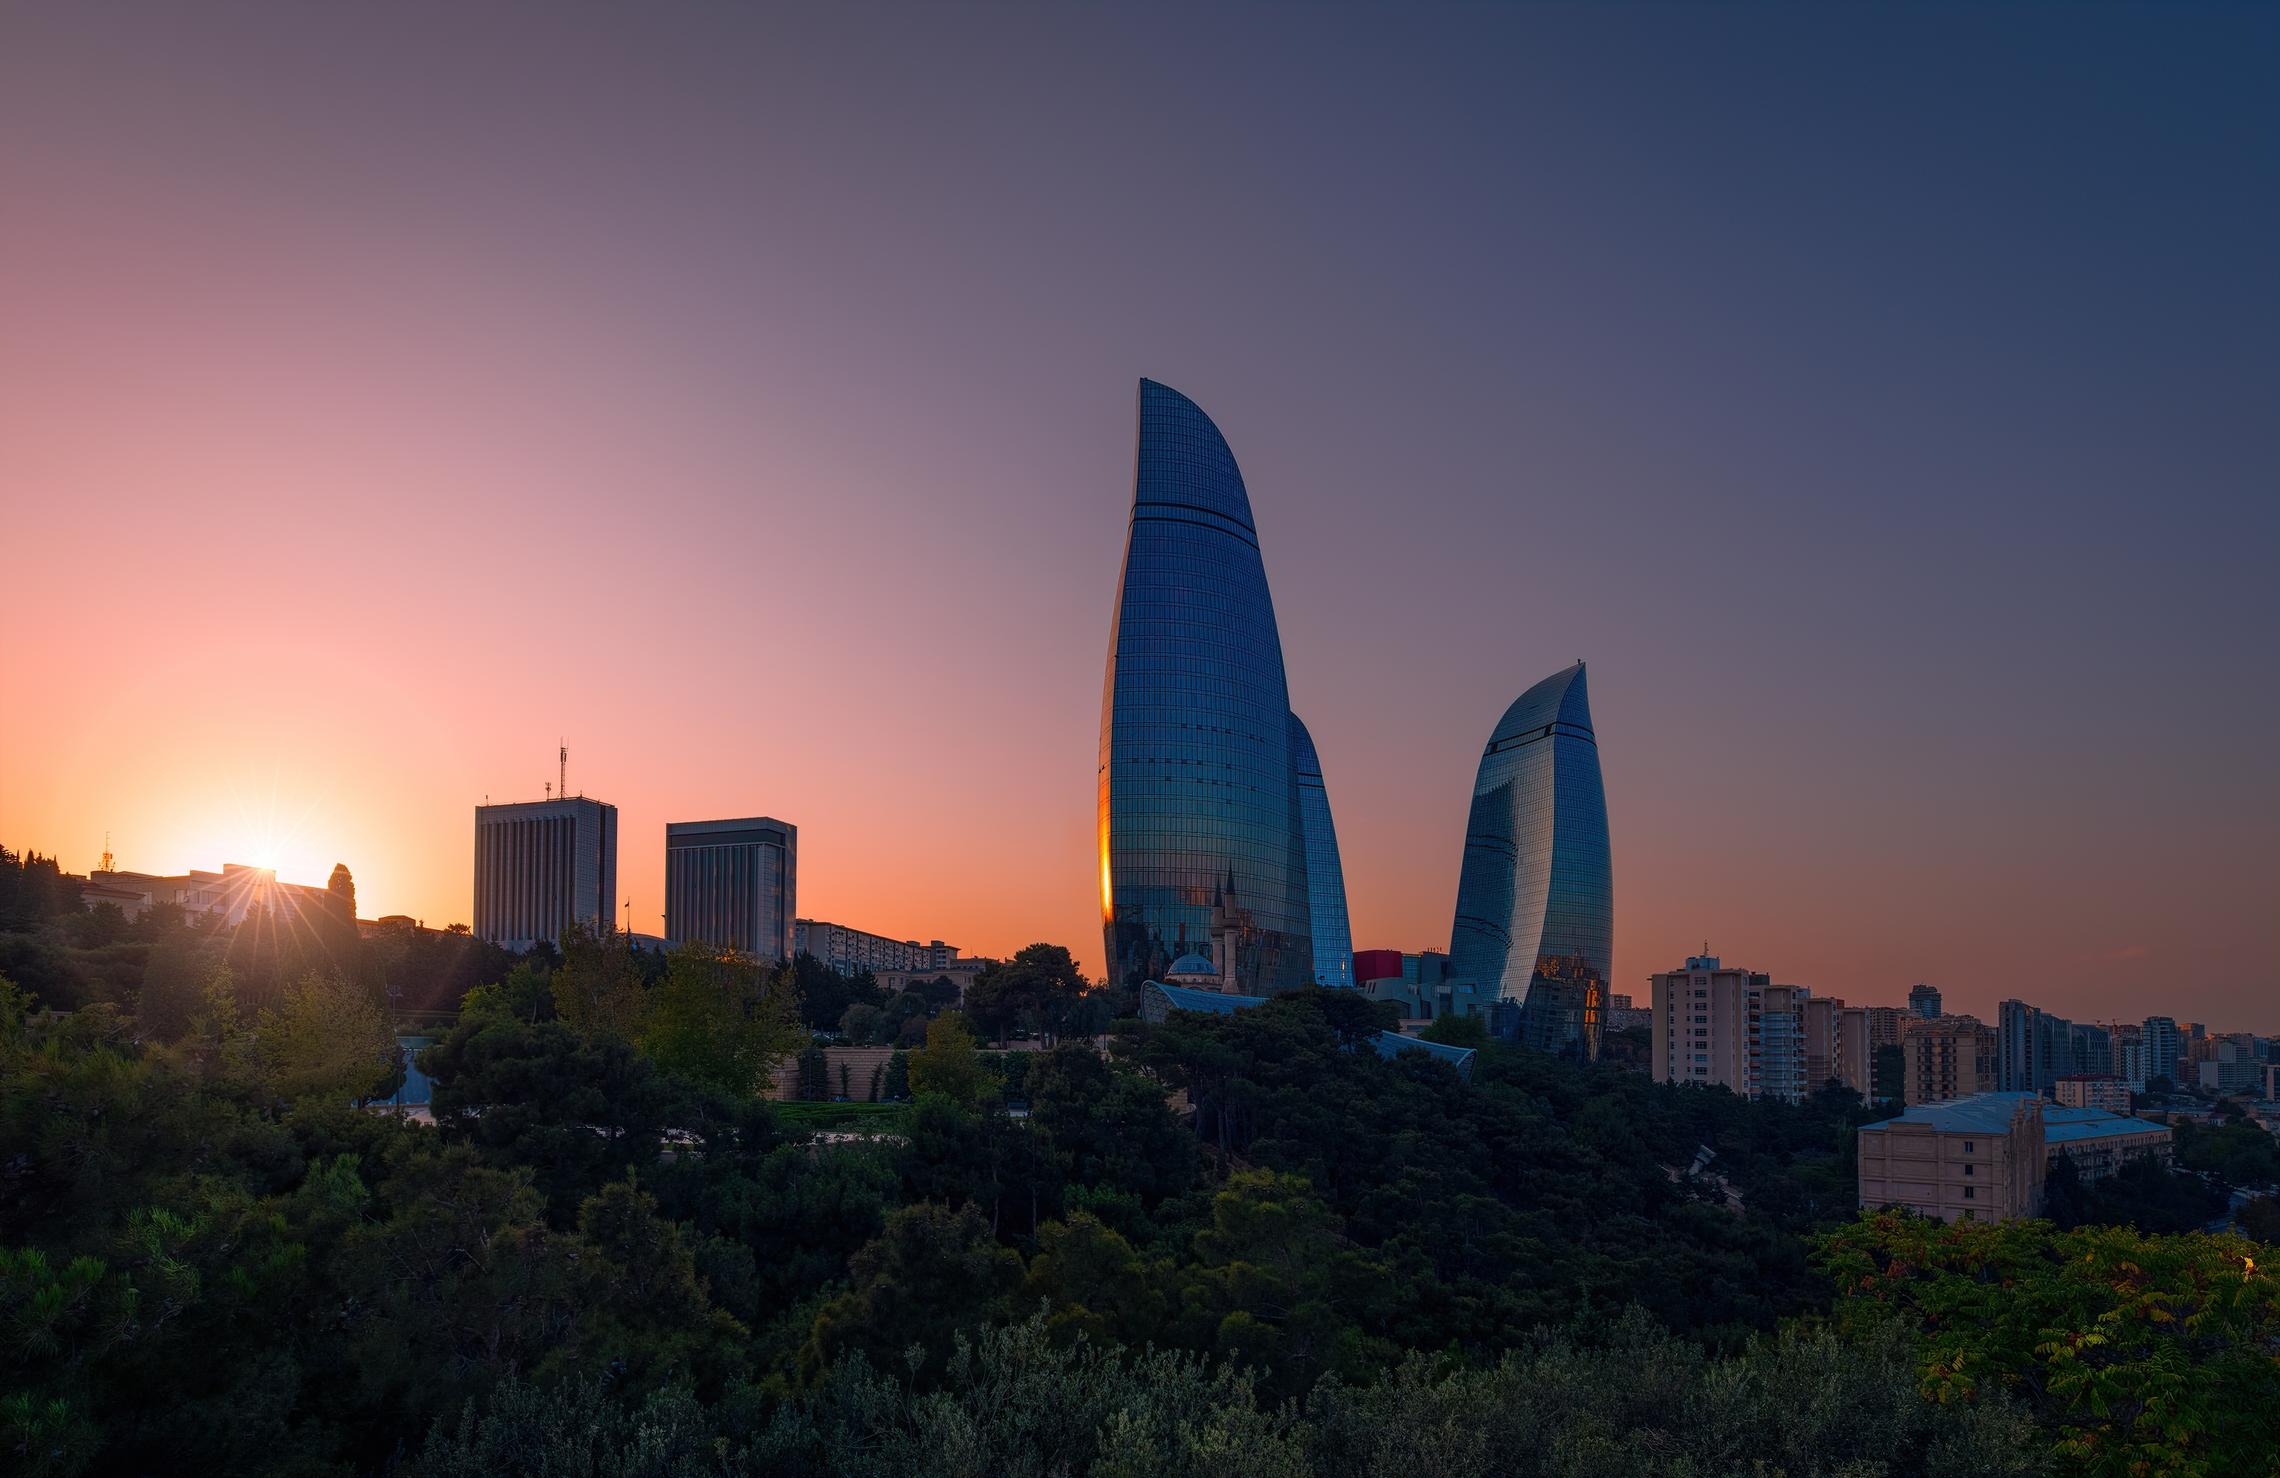 Виды Баку